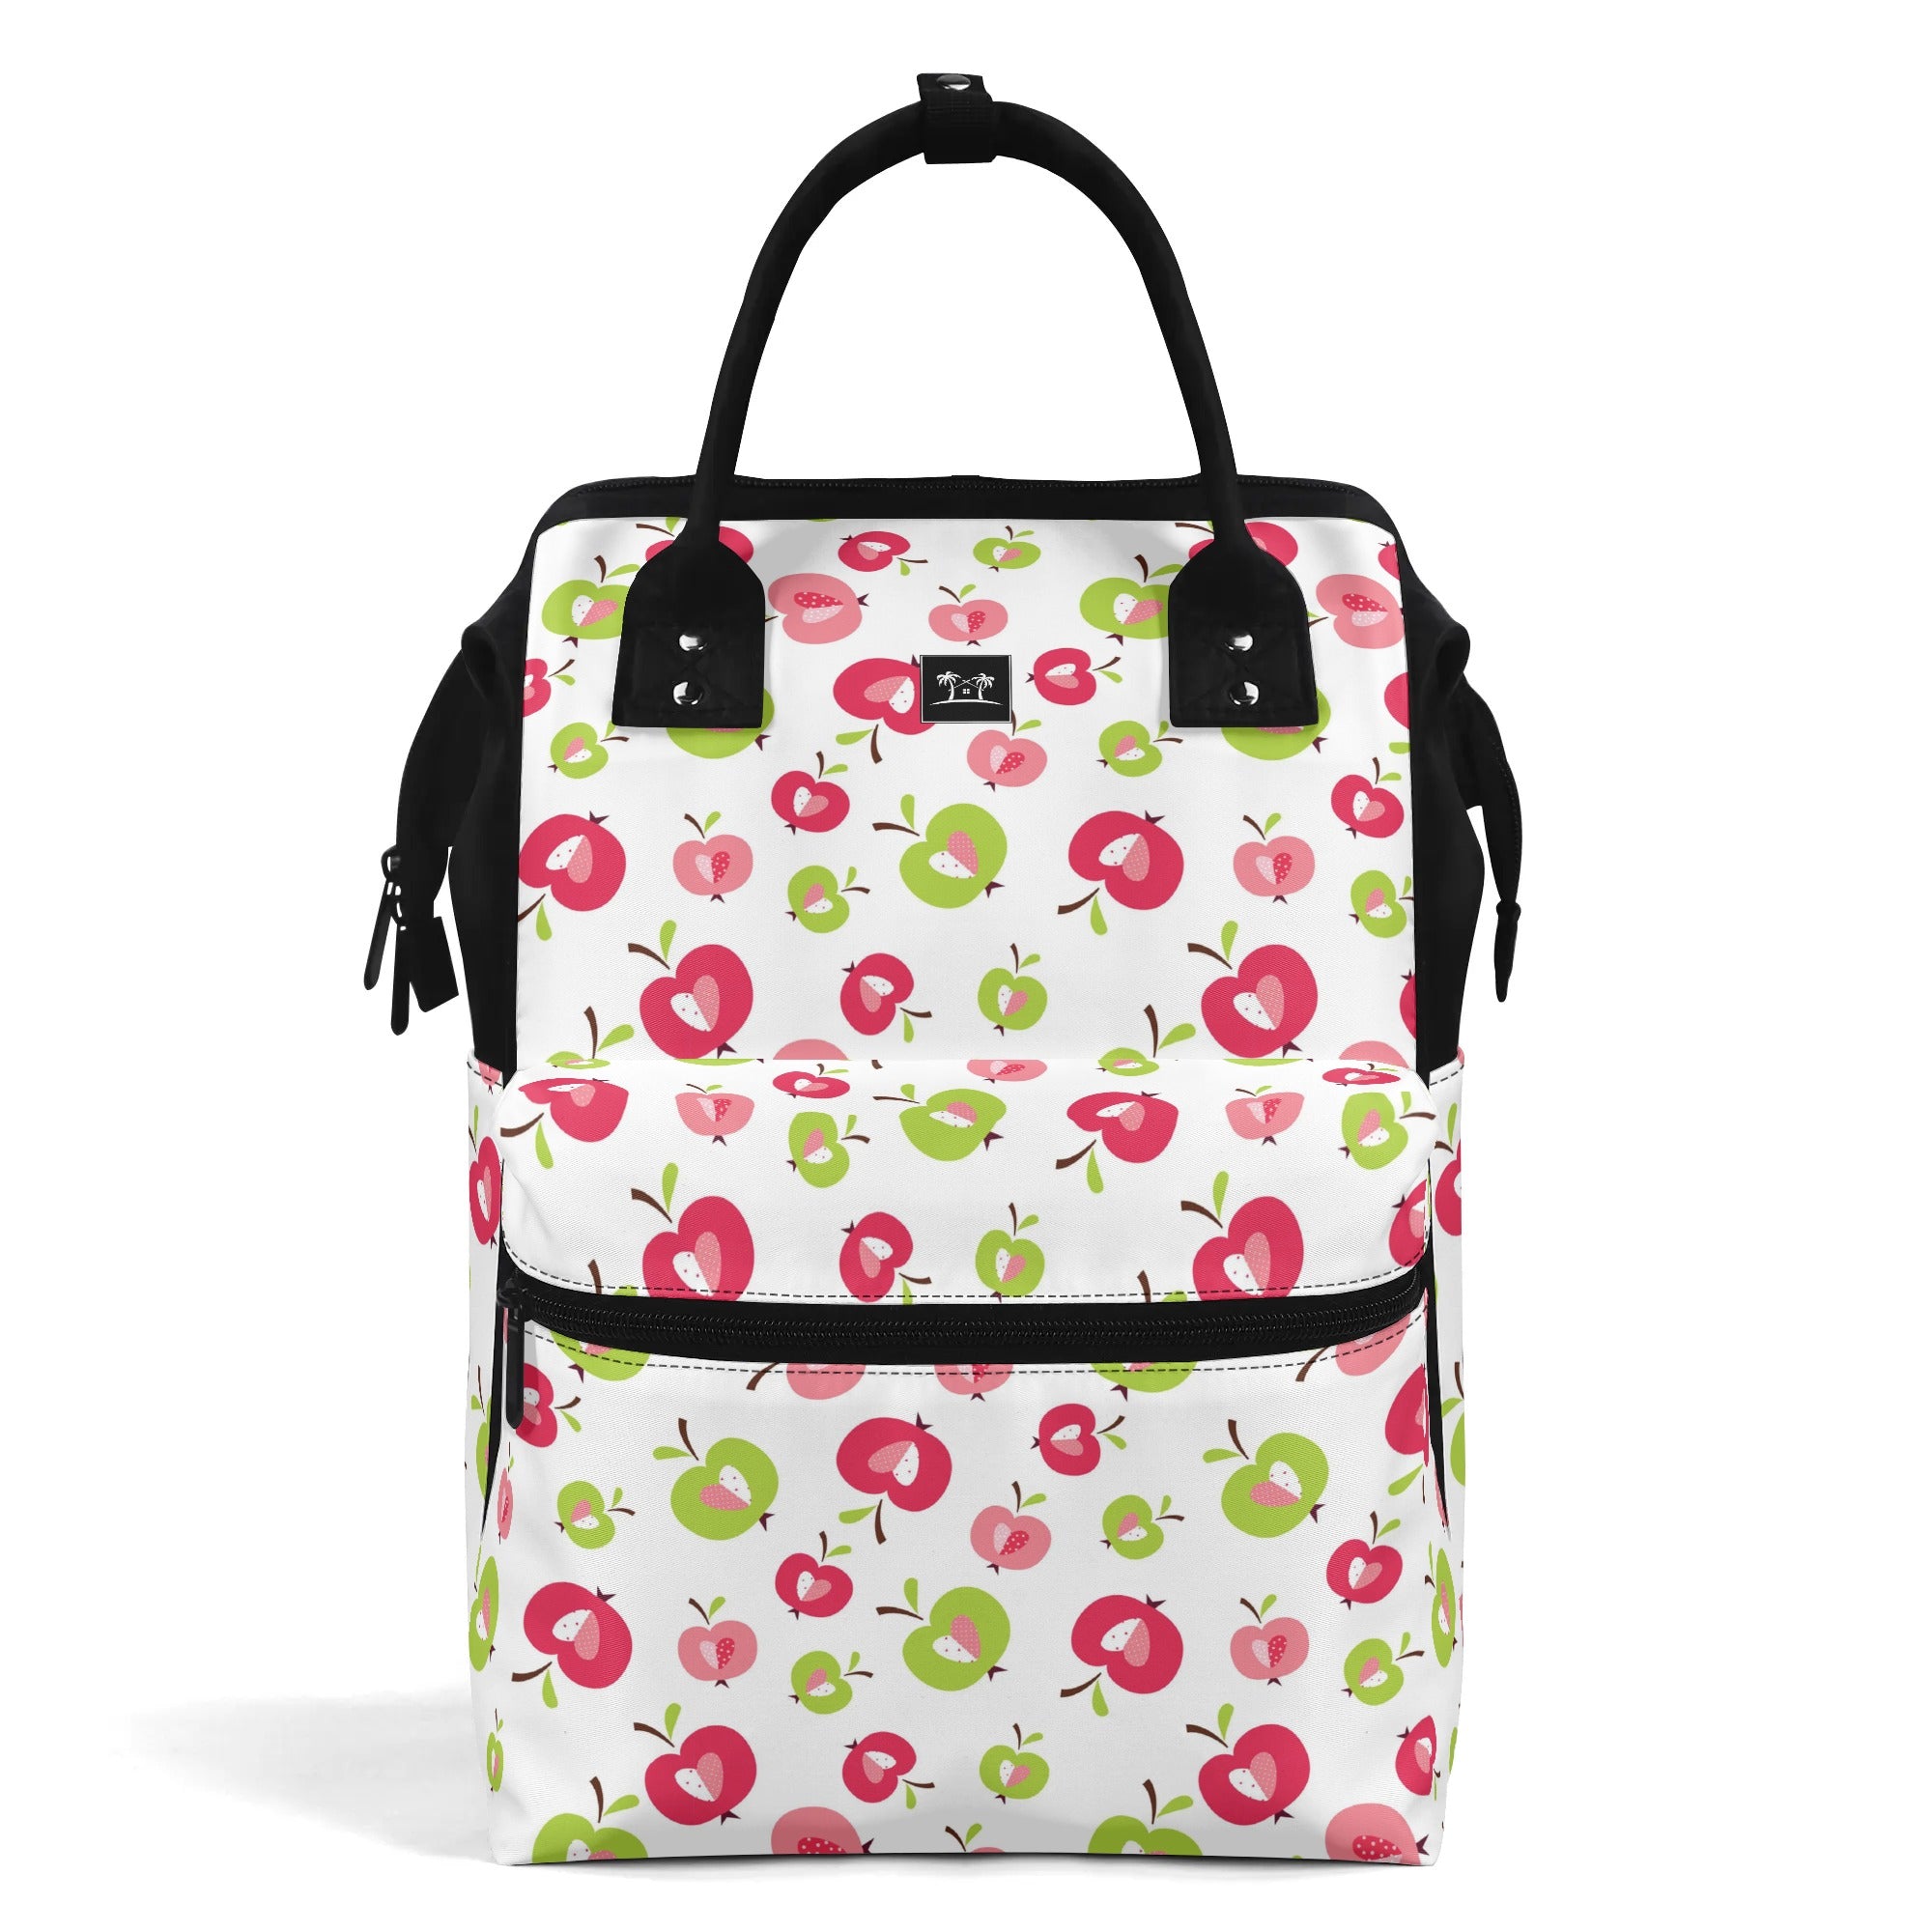 Large Capacity Diaper Backpack - Apples 2 Apples